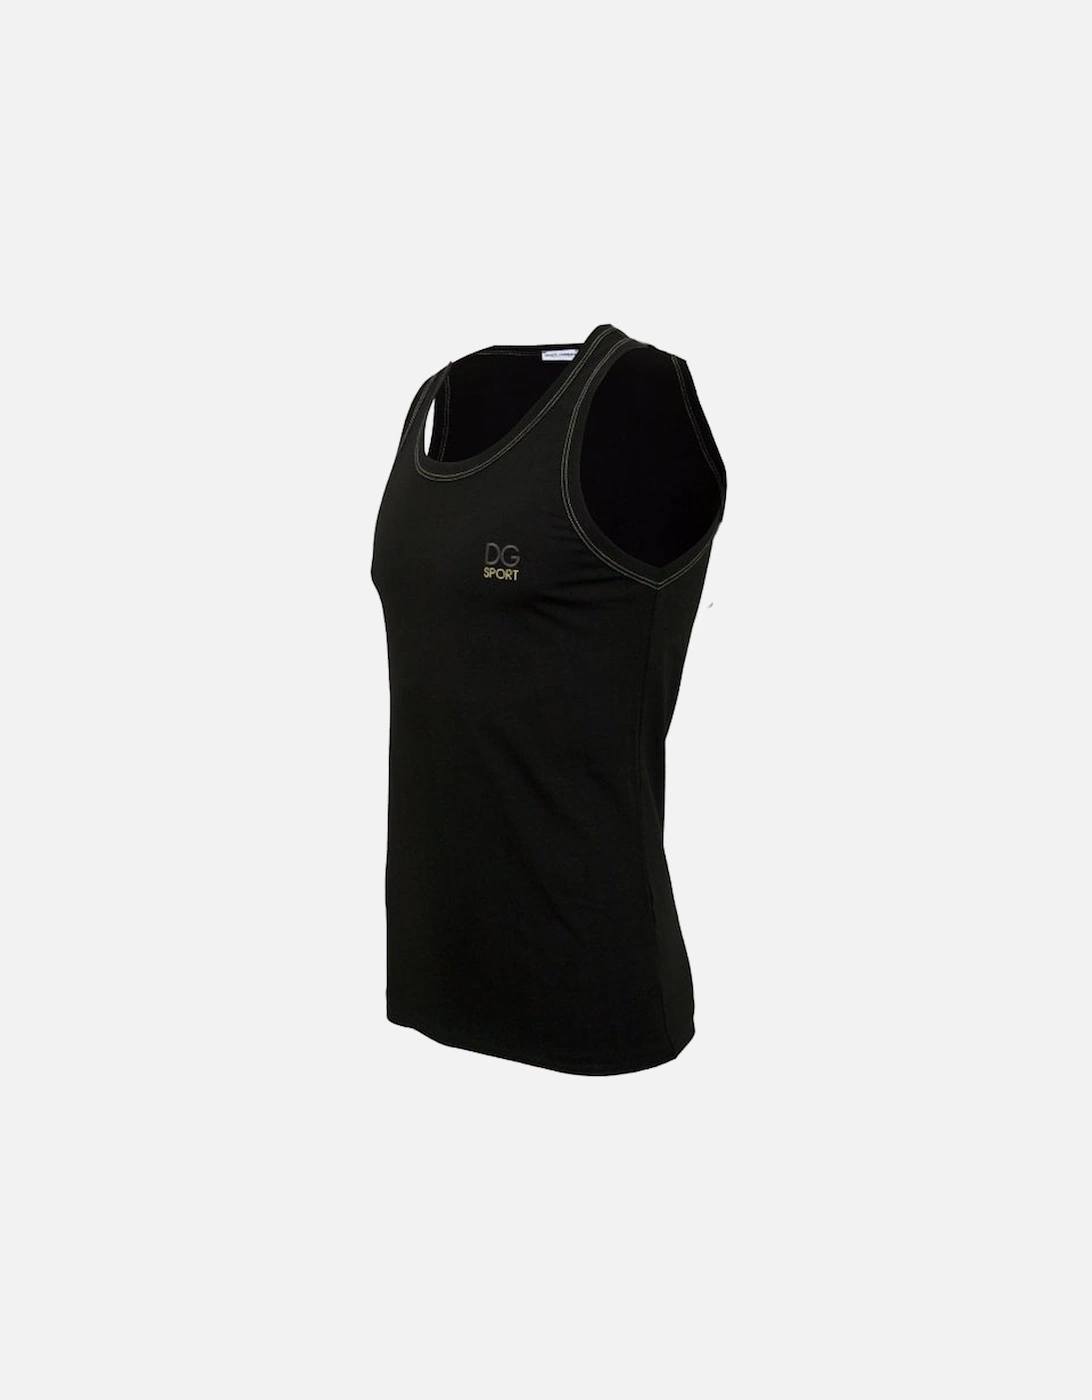 DG Sport Embroidery Pima Cotton Stretch Gym Vest, Black